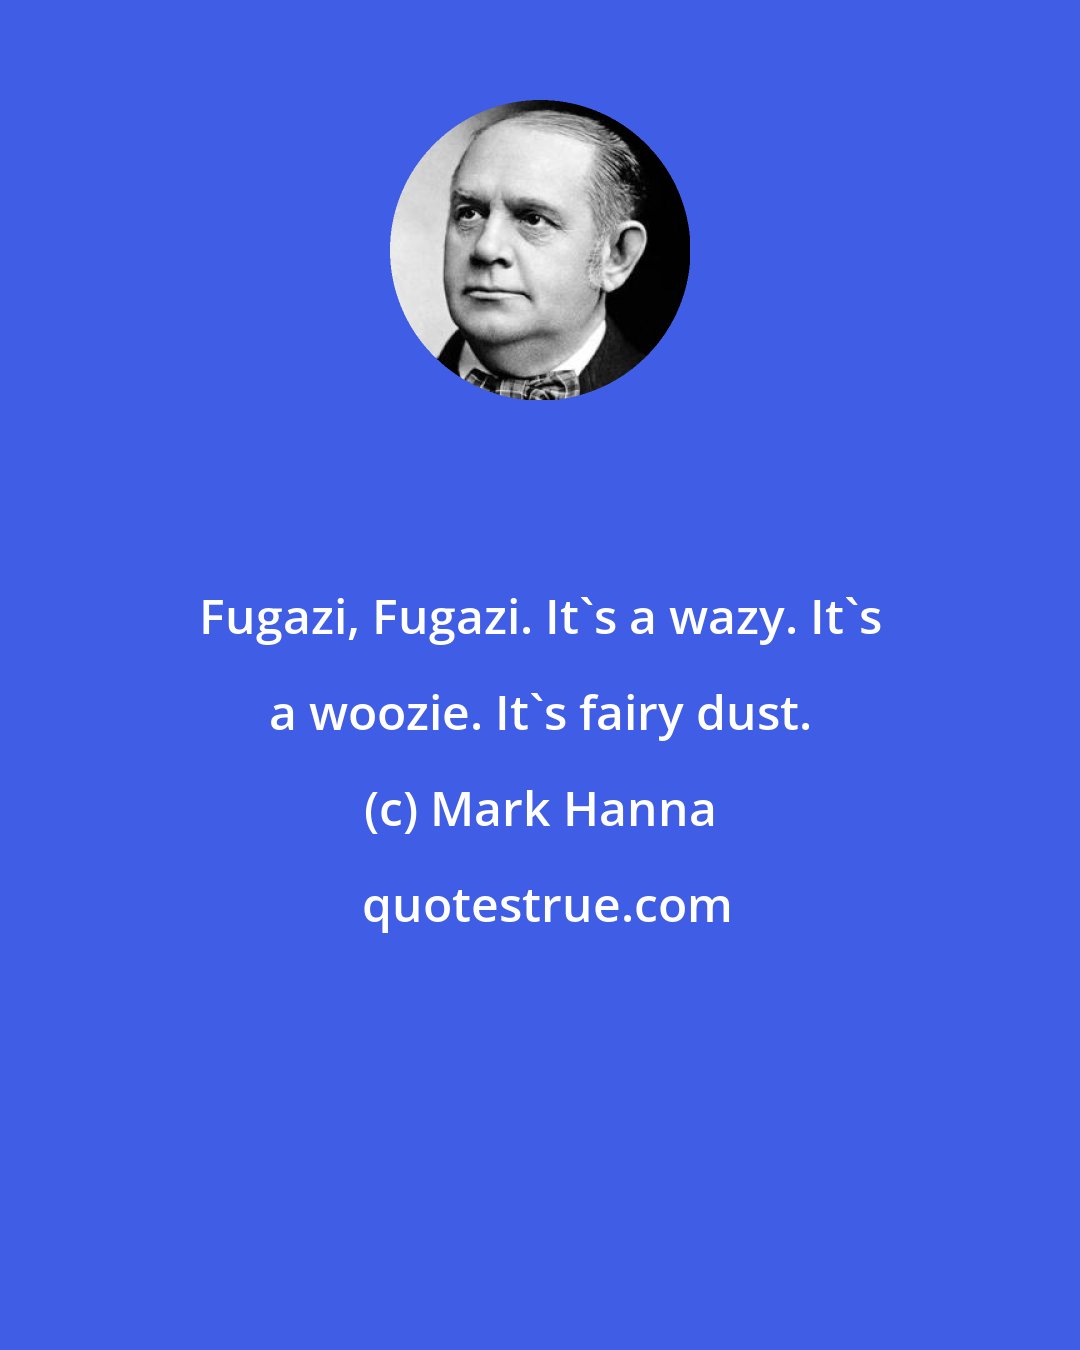 Mark Hanna: Fugazi, Fugazi. It's a wazy. It's a woozie. It's fairy dust.